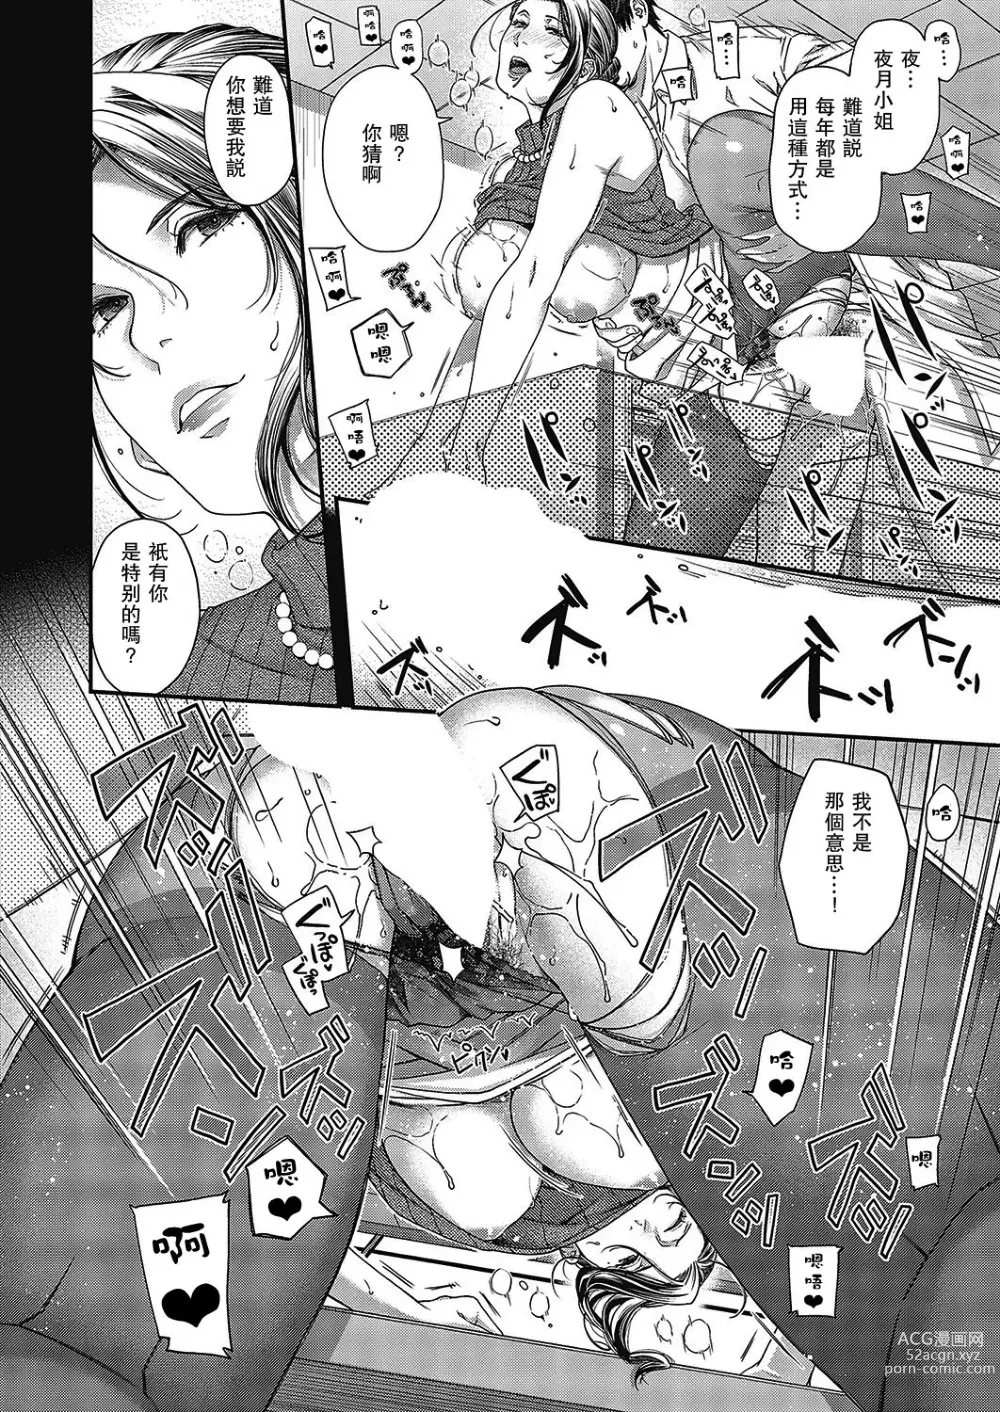 Page 34 of manga Senjou no Kemono